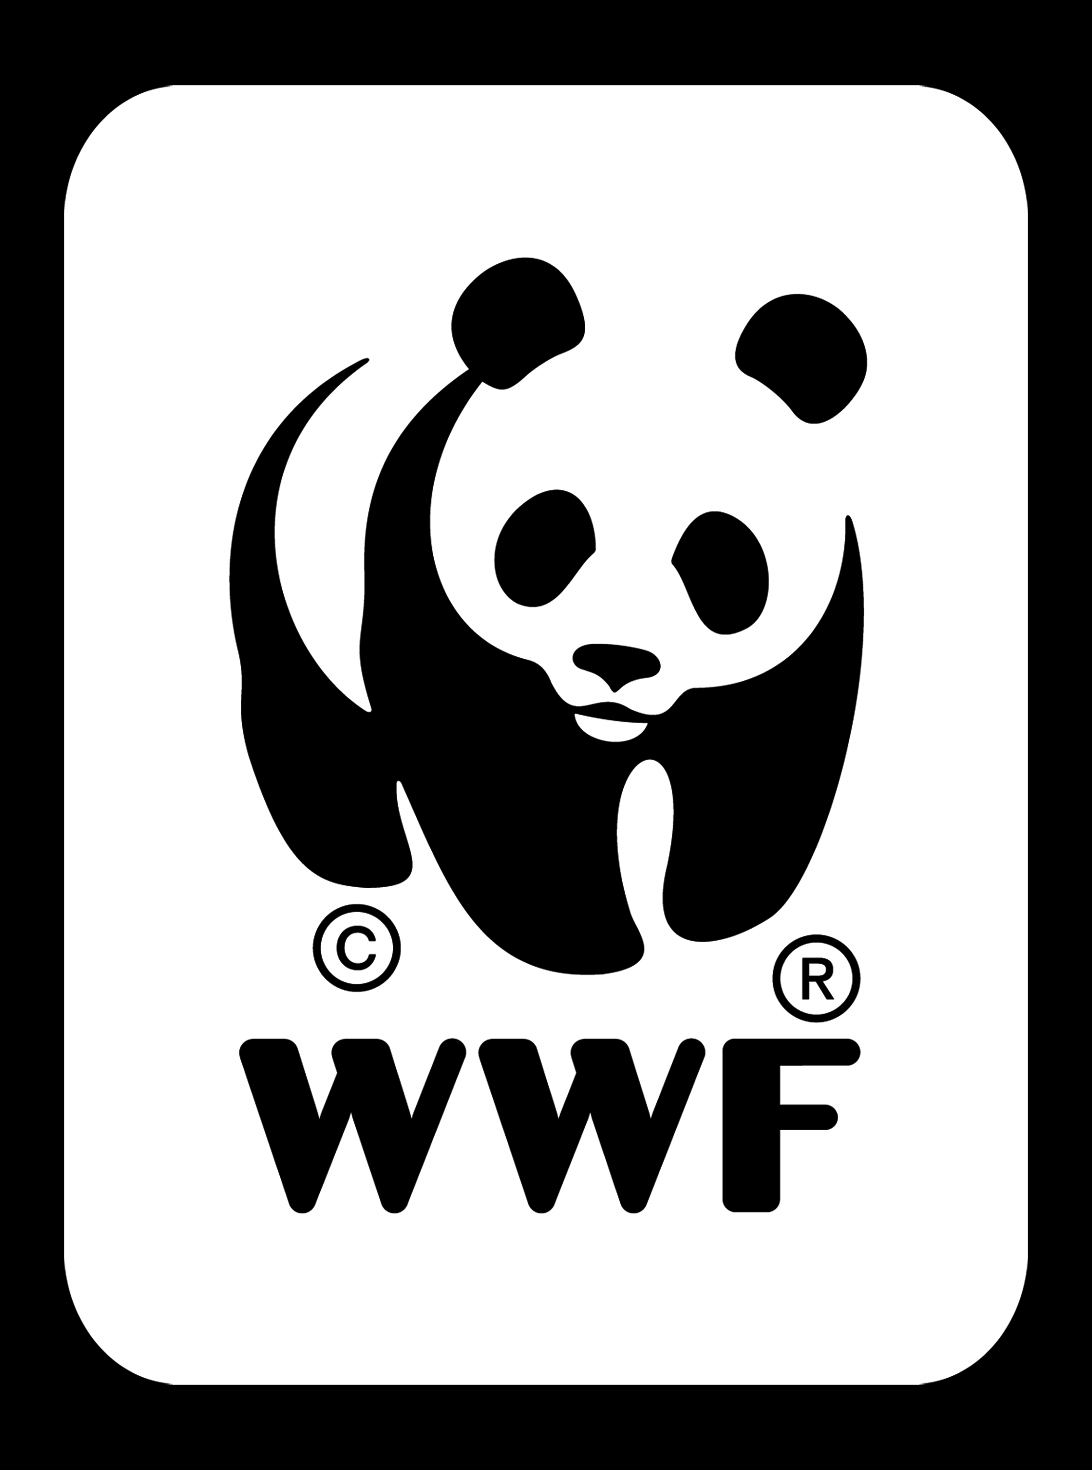 WWF Logo Vector Image Wwf Log